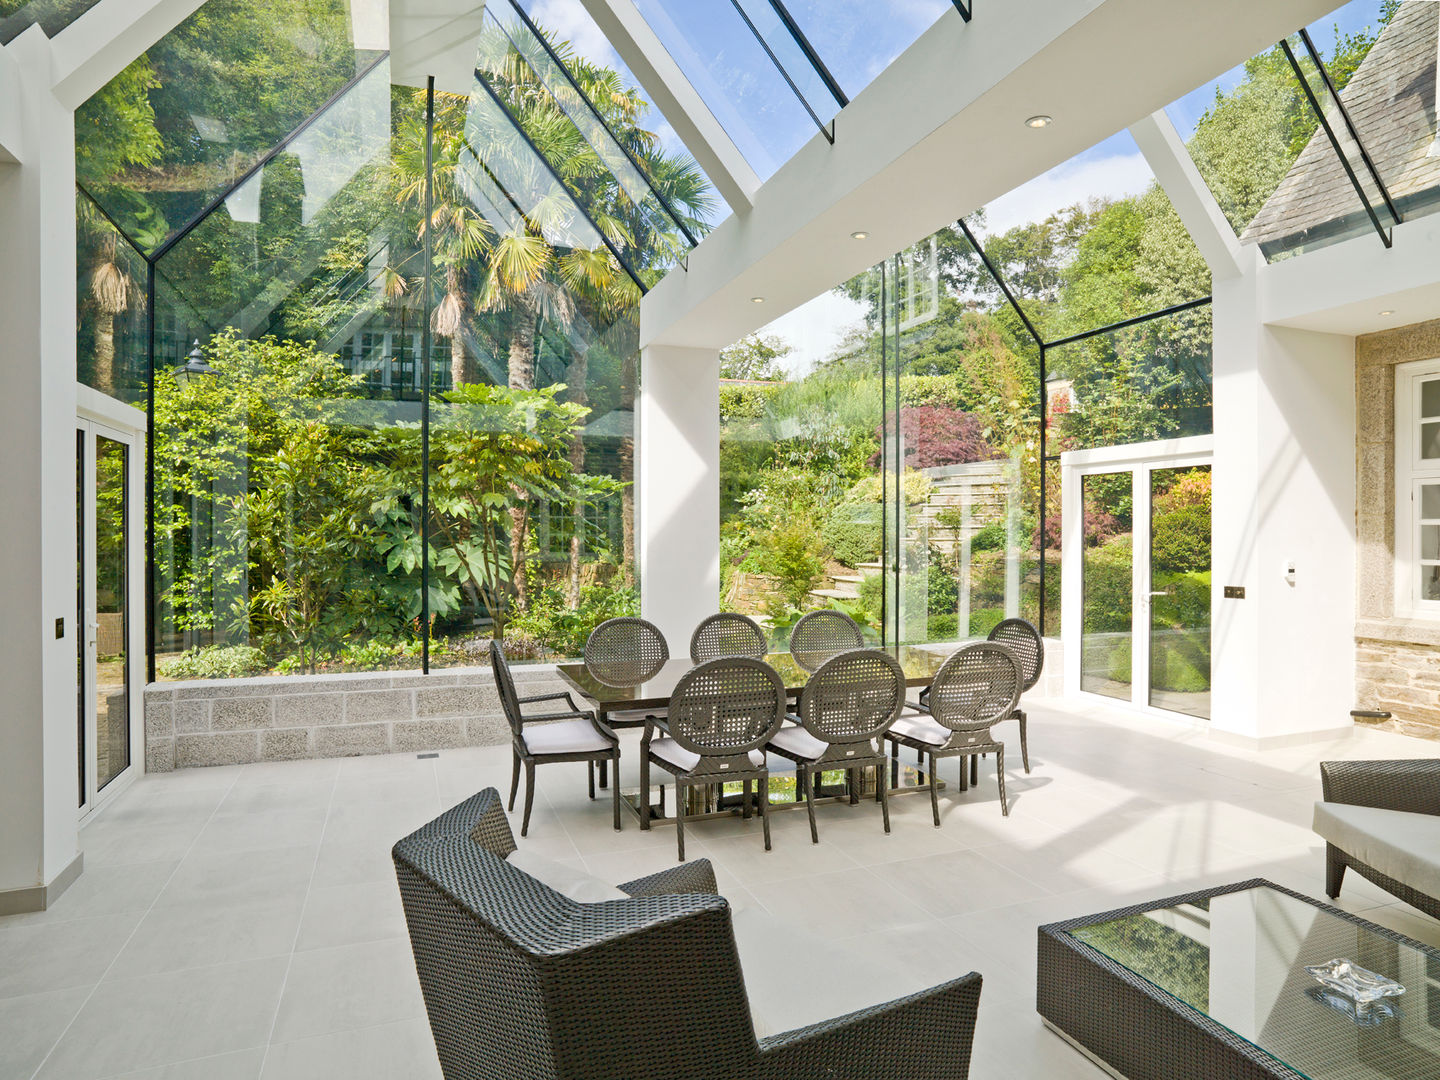 Structural Glass Conservatory, Cornwall homify Nowoczesny ogród zimowy Szkło